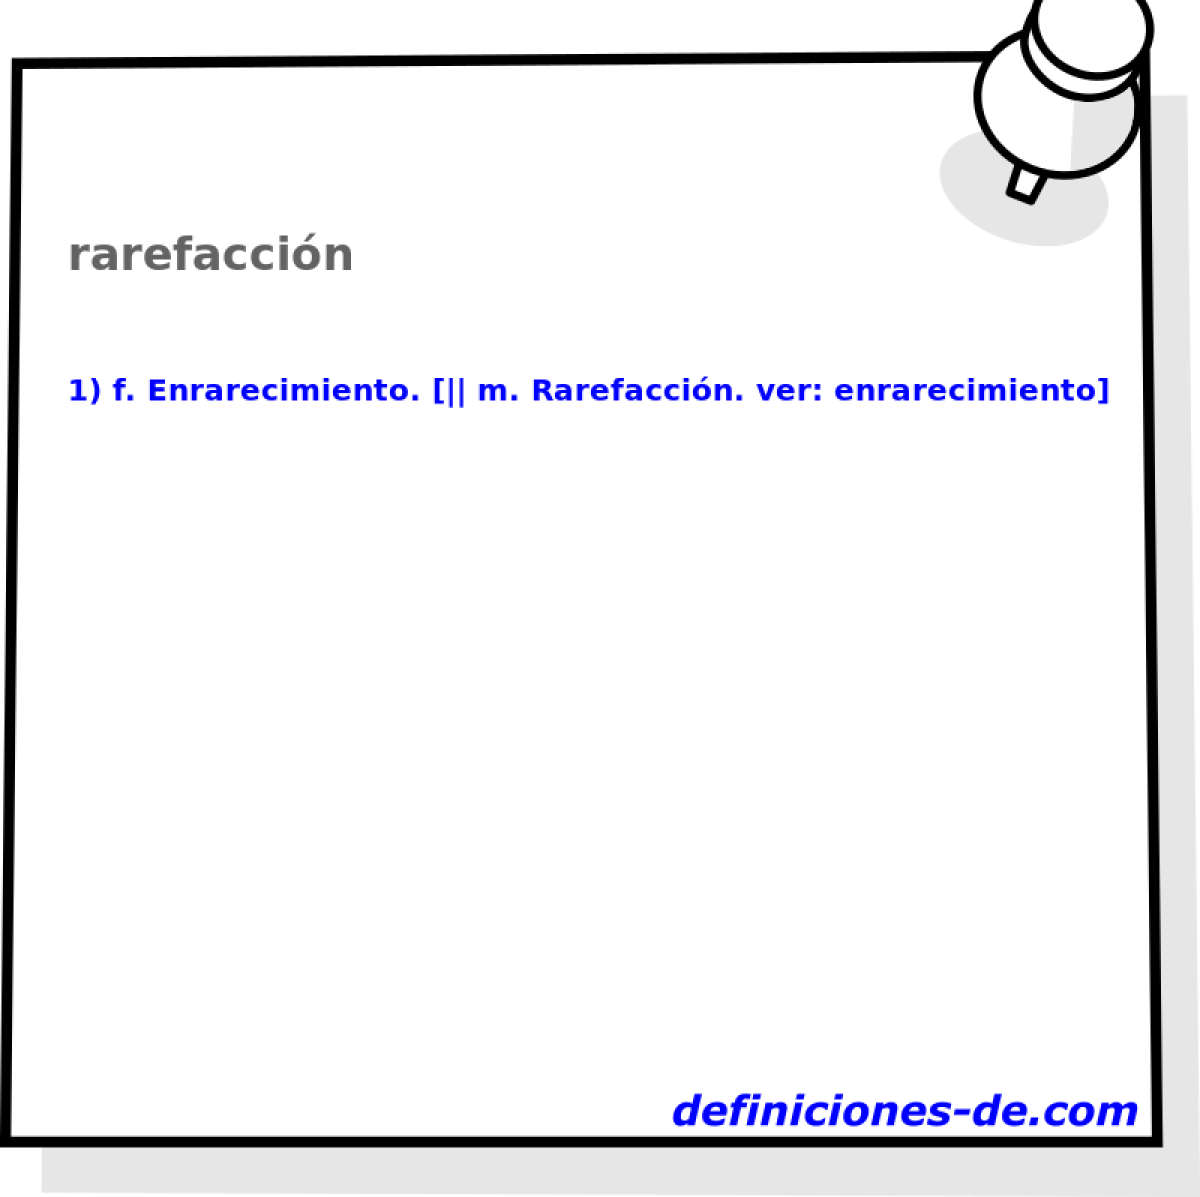 rarefaccin 